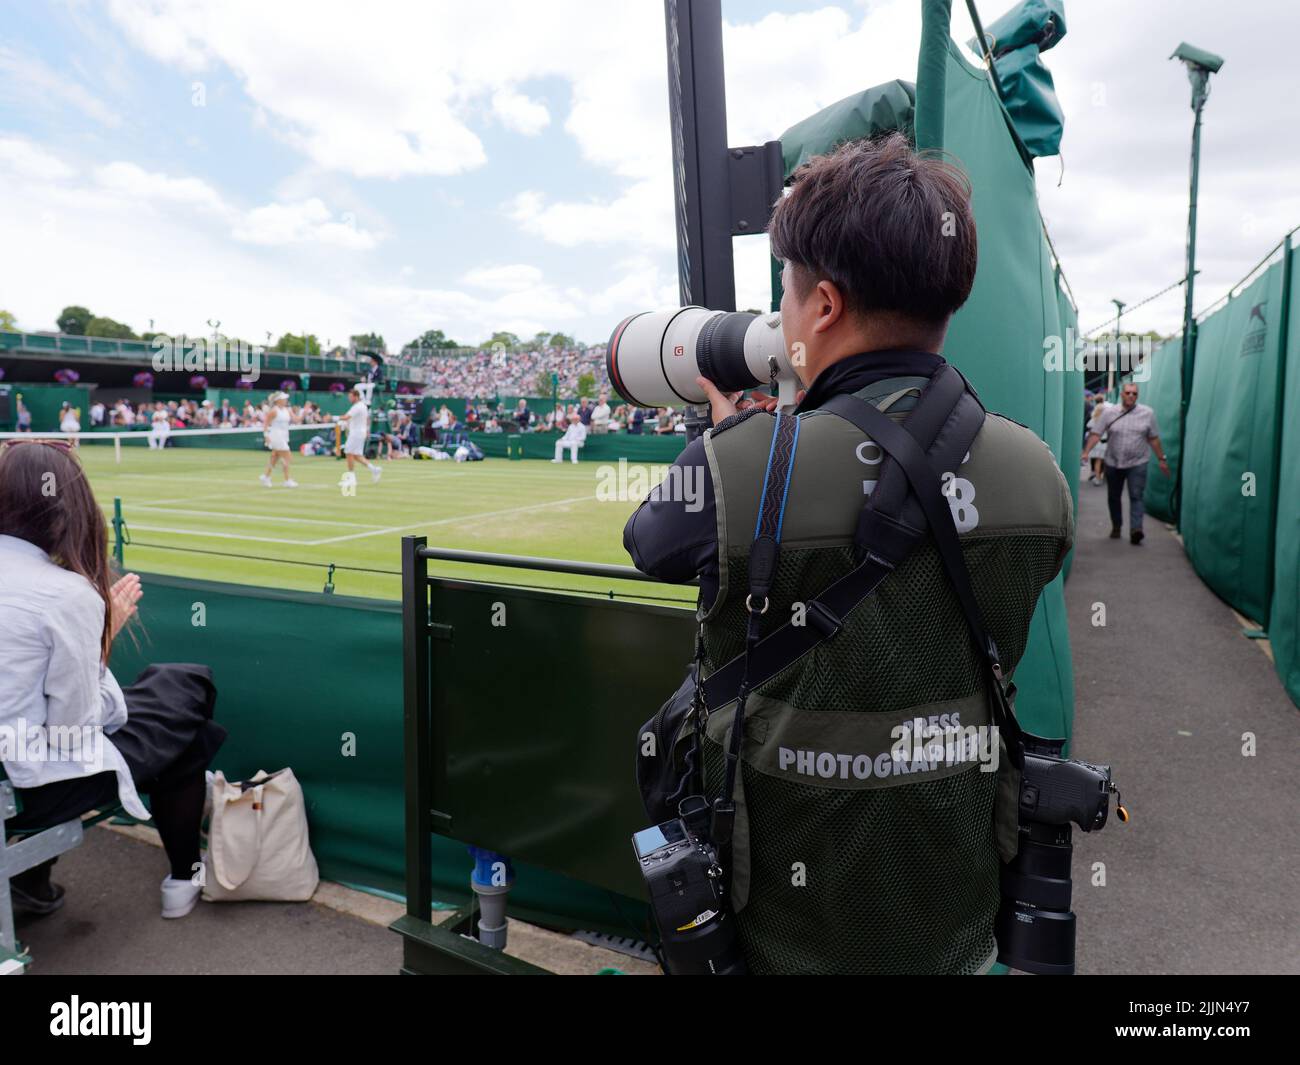 Wimbledon, Gran Londres, Inglaterra, Julio 02 2022: Campeonato de Tenis de Wimbledon. Fotógrafo oficial en el trabajo observando un partido de tenis. Foto de stock